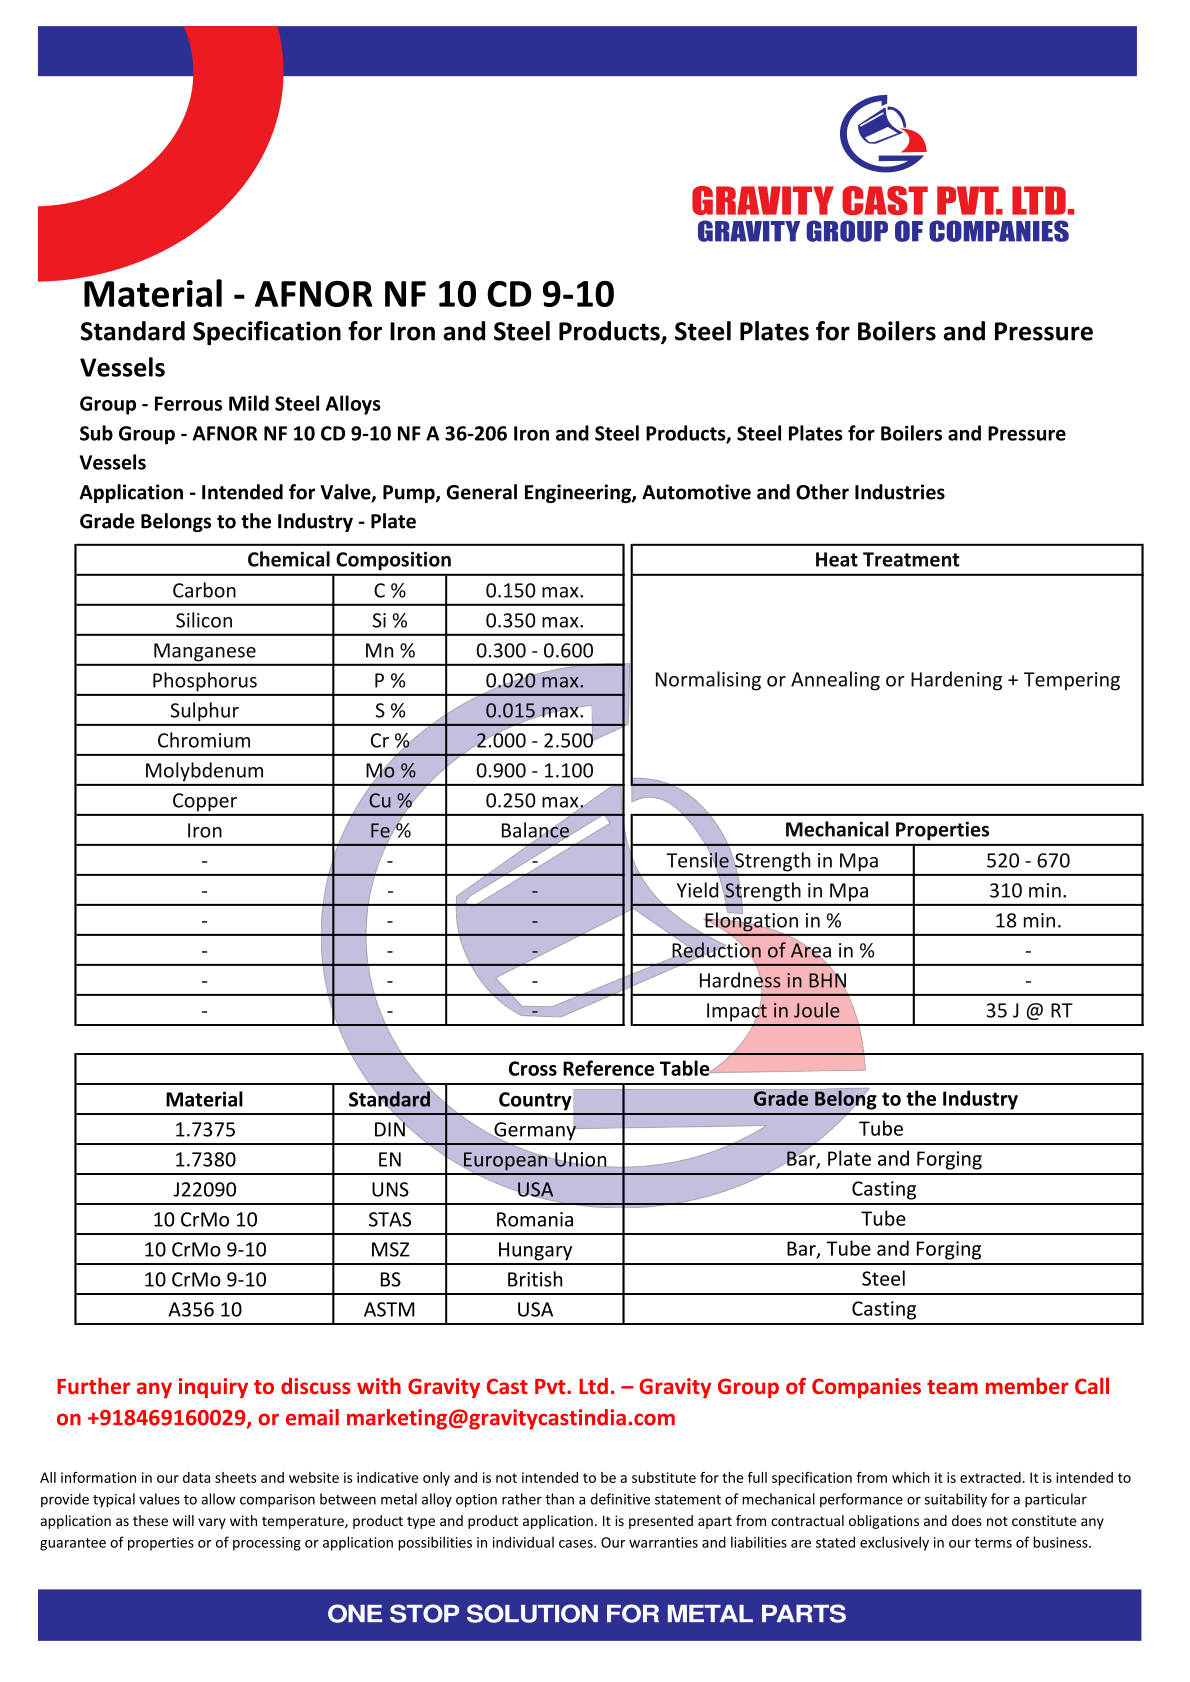 AFNOR NF 10 CD 9-10.pdf